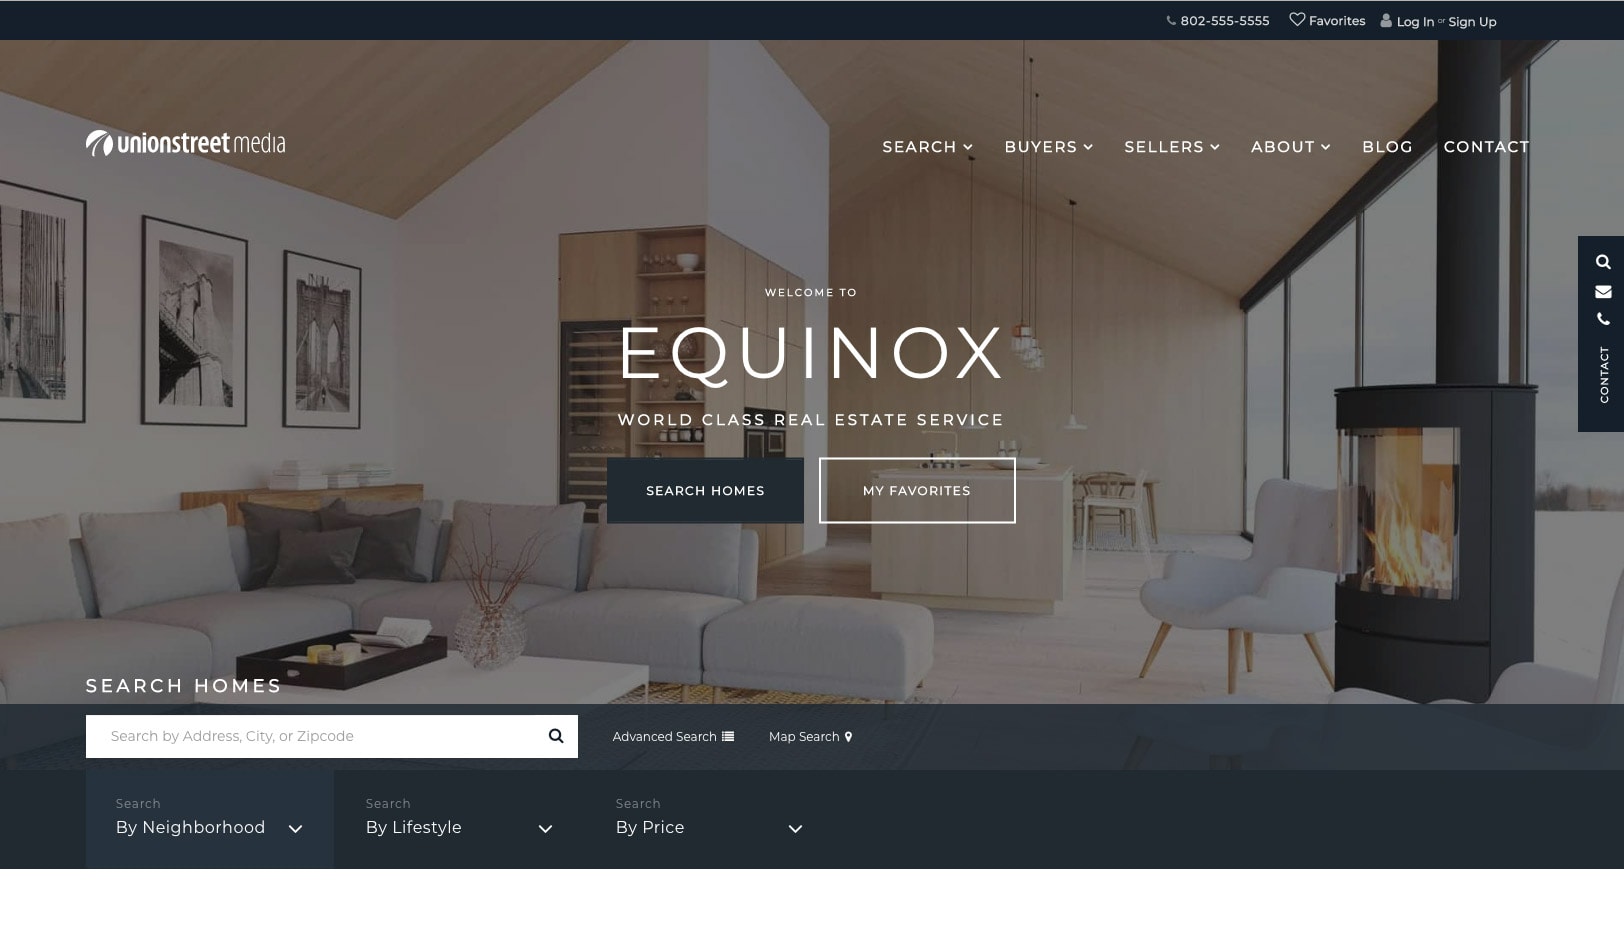 Union Street Media's Equinox Real Estate Website Layout